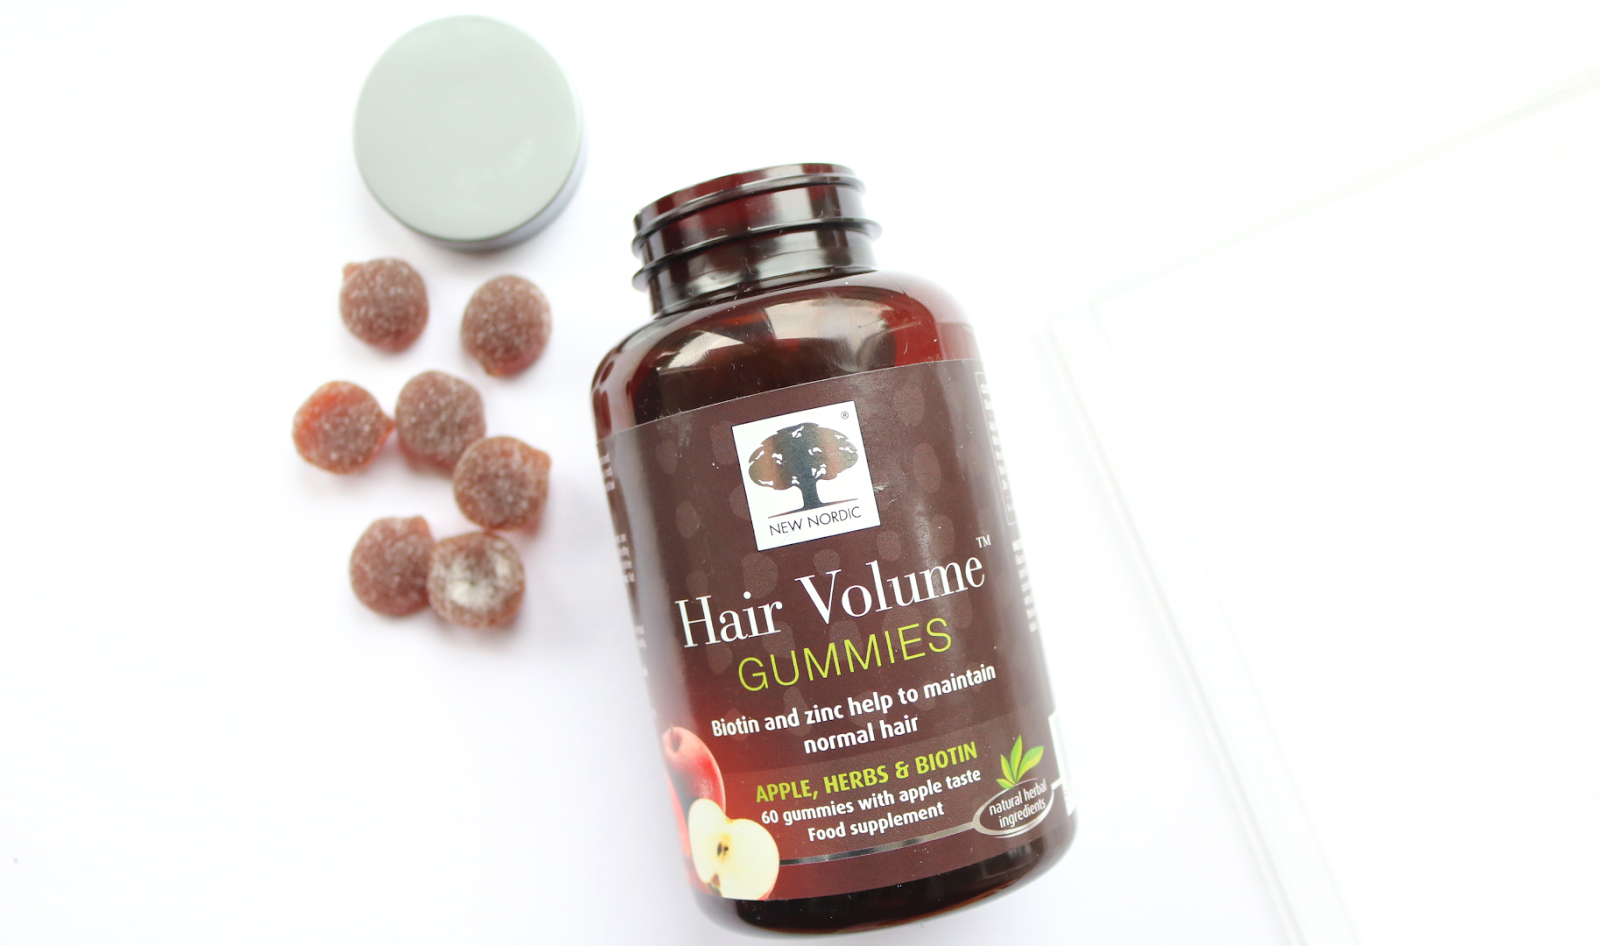 Health & Lifestyle: New Nordic Hair Volume, Hair Volume plus Nail Strong & Hair Volume Gummies - 3 Month Trial Review